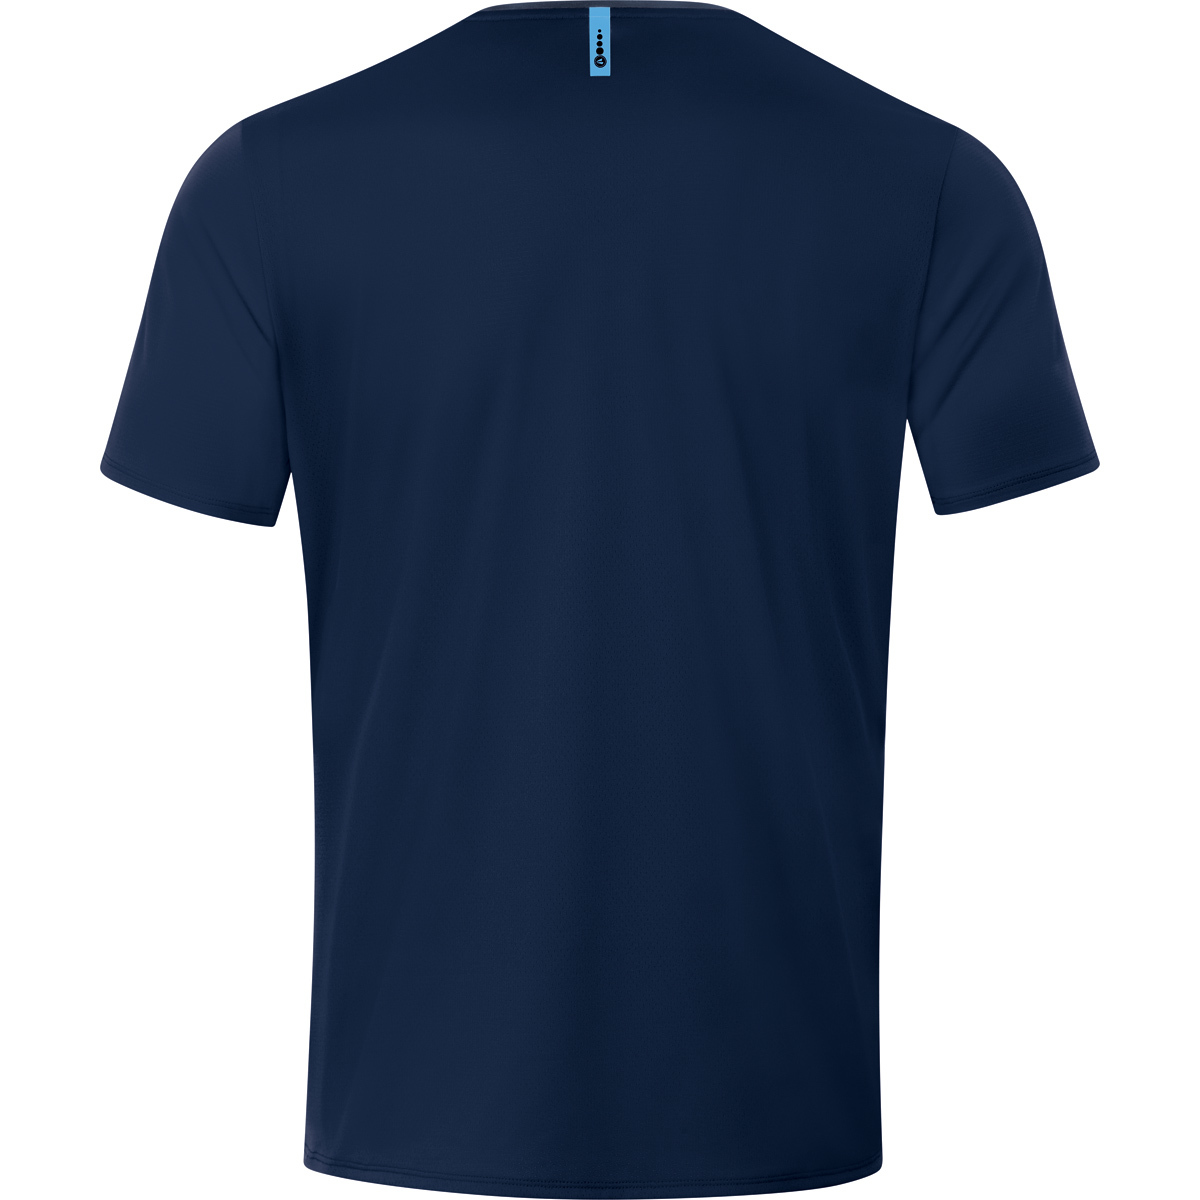 Gr. T-Shirt marine/darkblue/skyblue, 6120 XXL, 2.0 JAKO Herren, Champ